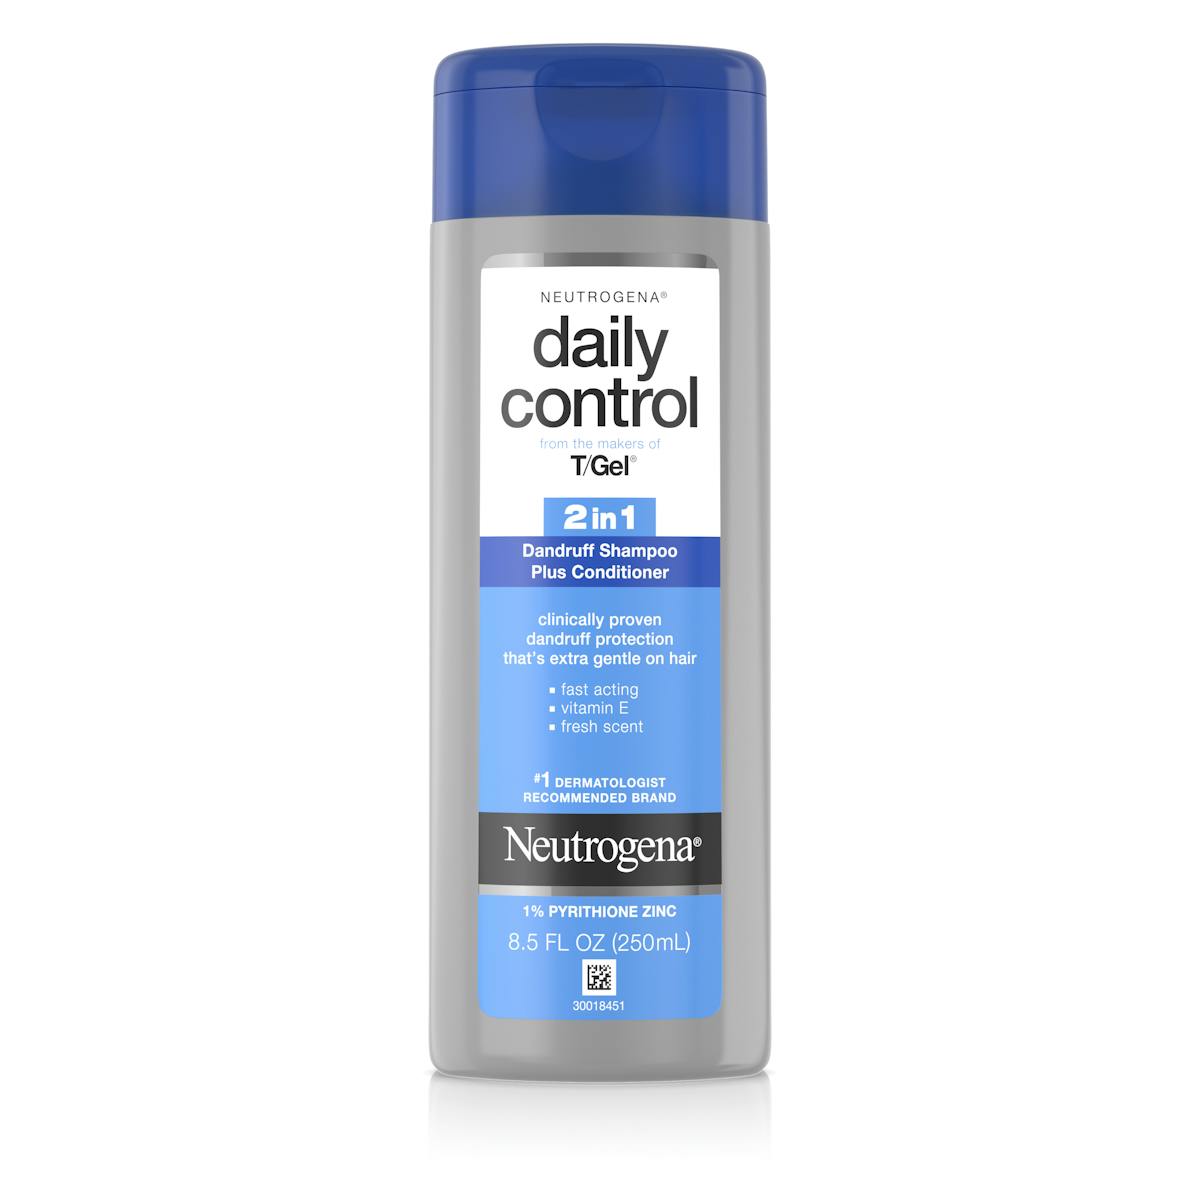 T Gel Daily Control 2 In 1 Dandruff Shampoo Plus Conditioner